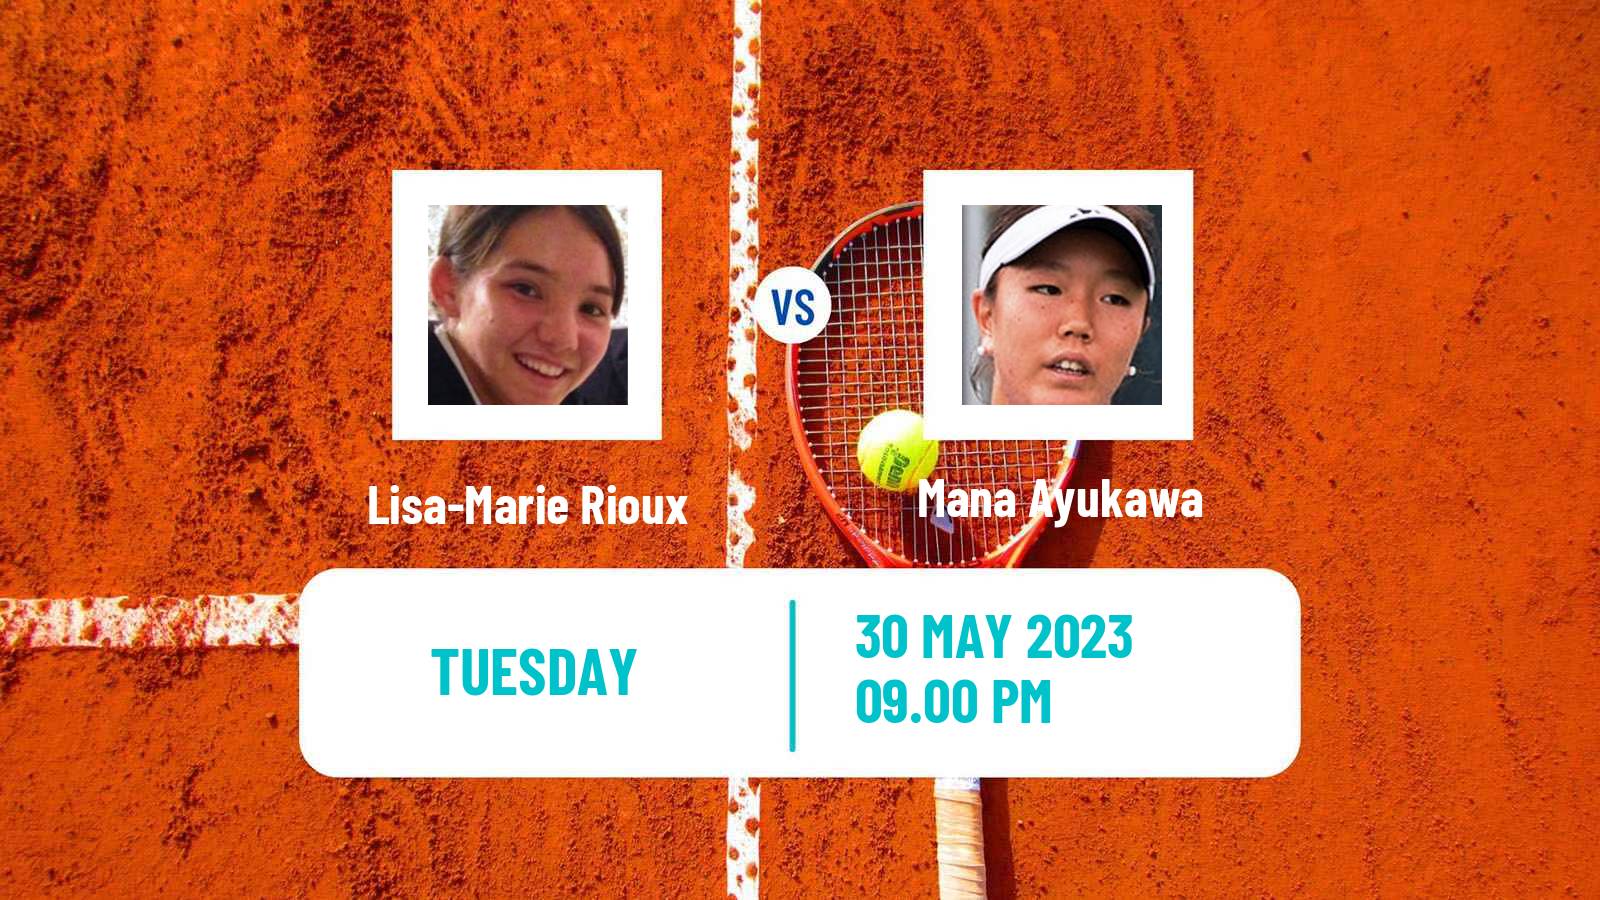 Tennis ITF W25 Tokyo Women Lisa-Marie Rioux - Mana Ayukawa